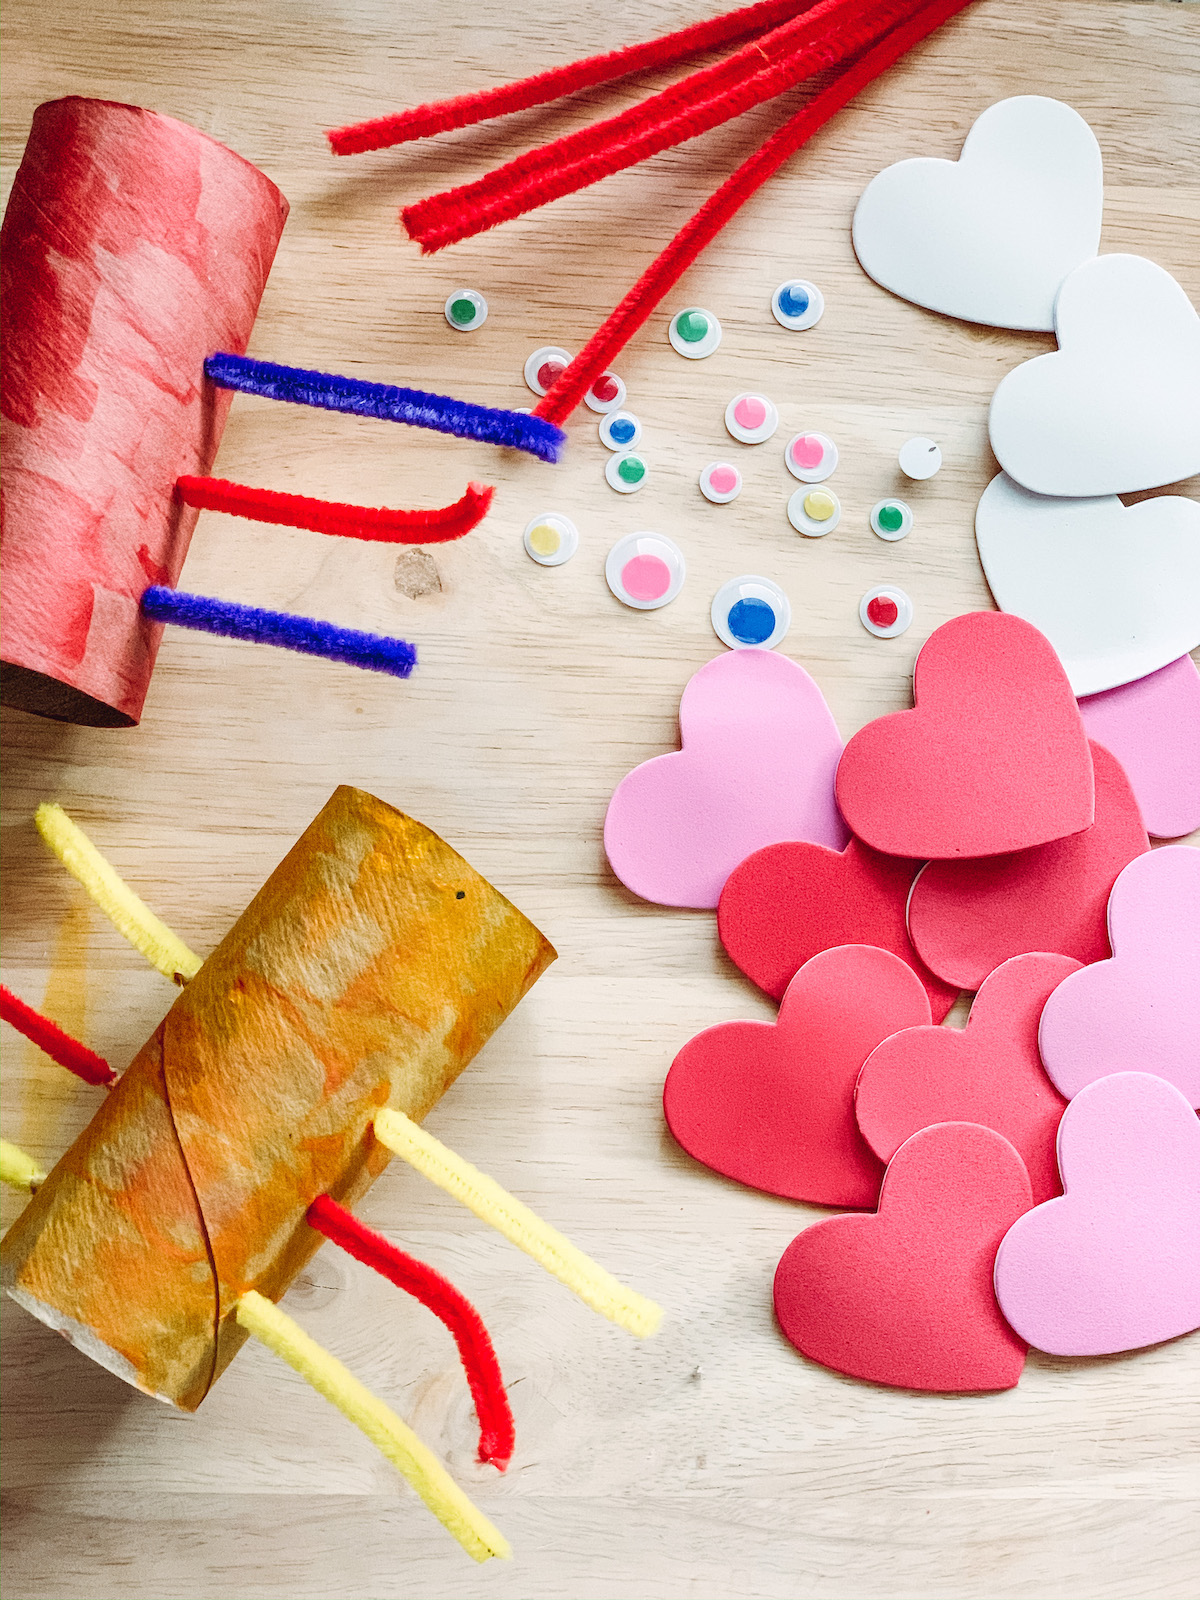 Valentine Lovebugs- construction paper hearts, googly eyes, craft